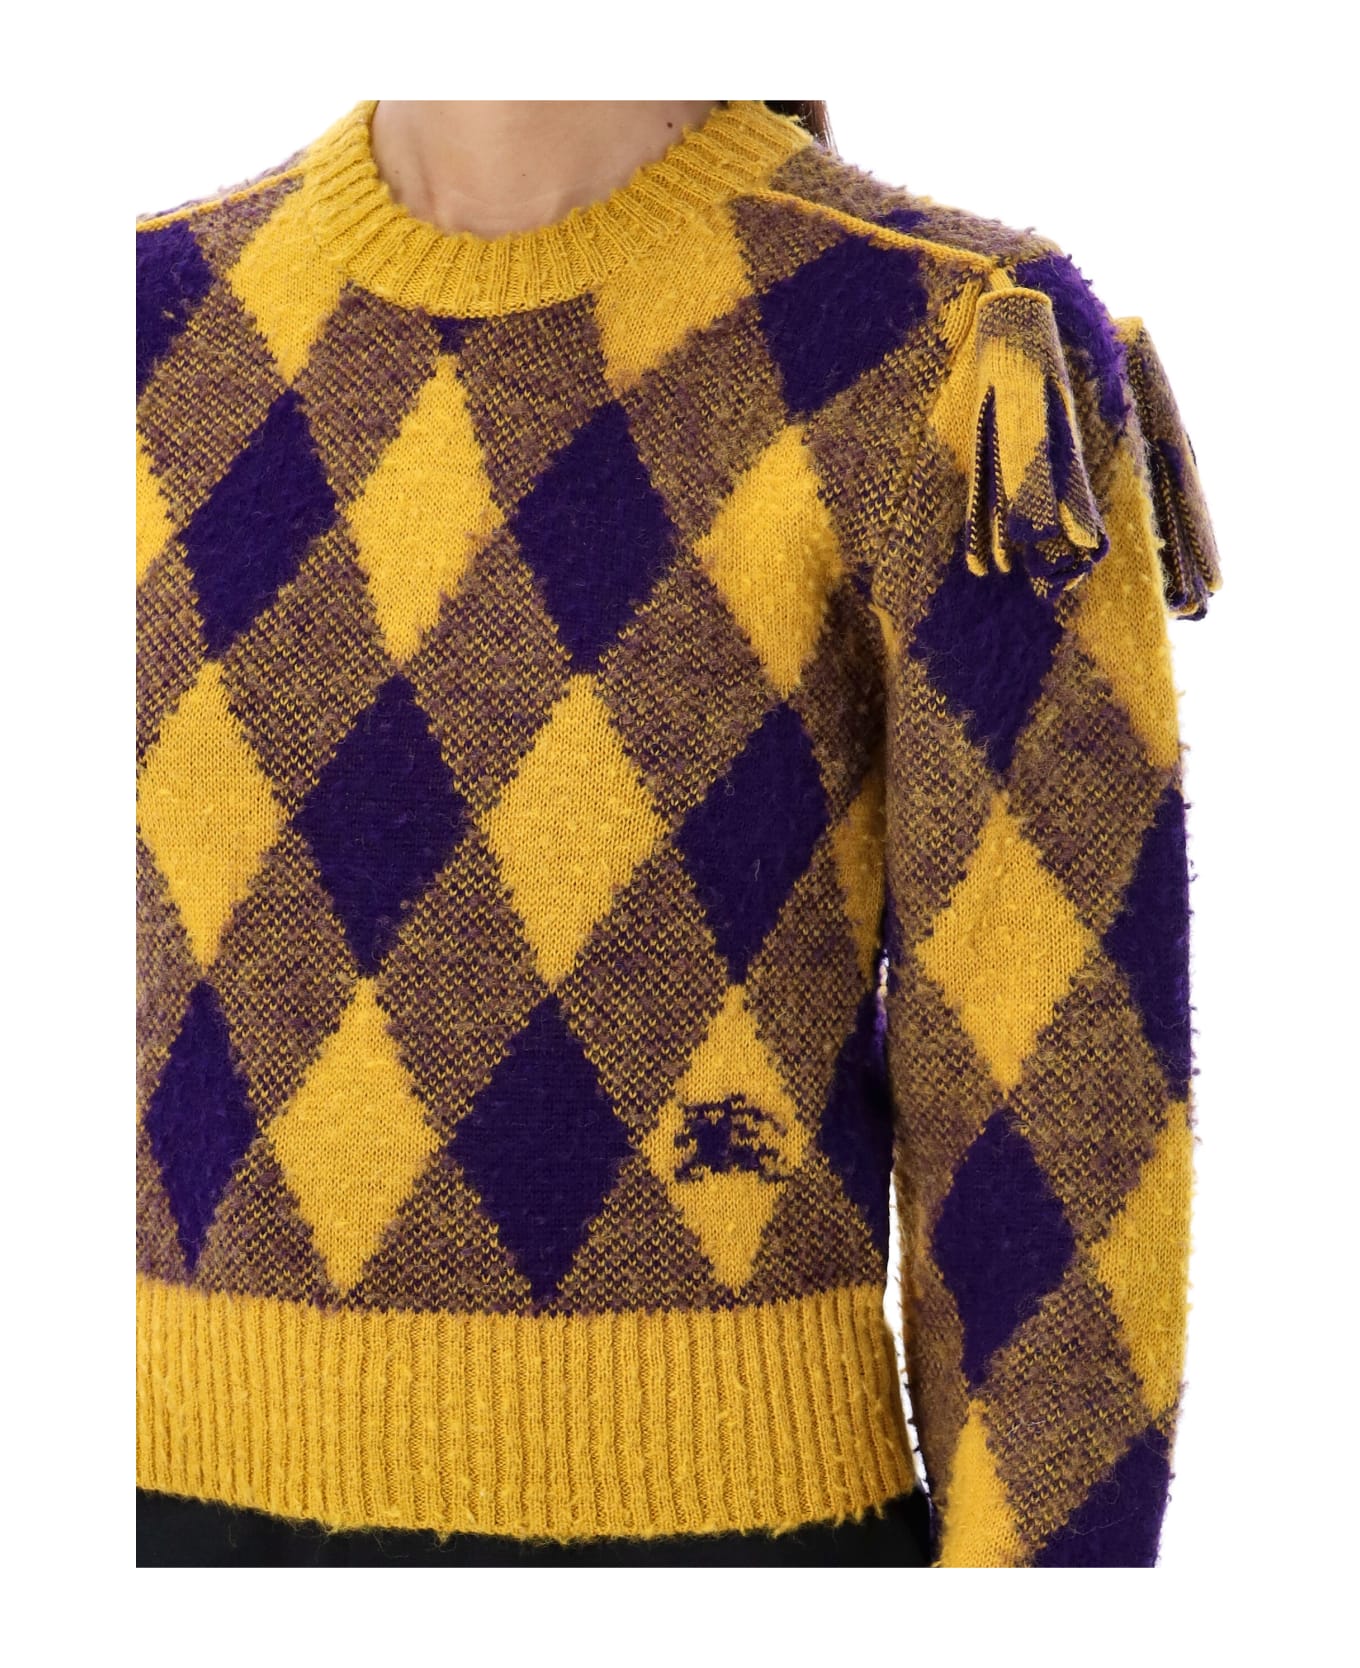 Burberry London Argyle Wool Sweater - YELLOW PURPLE